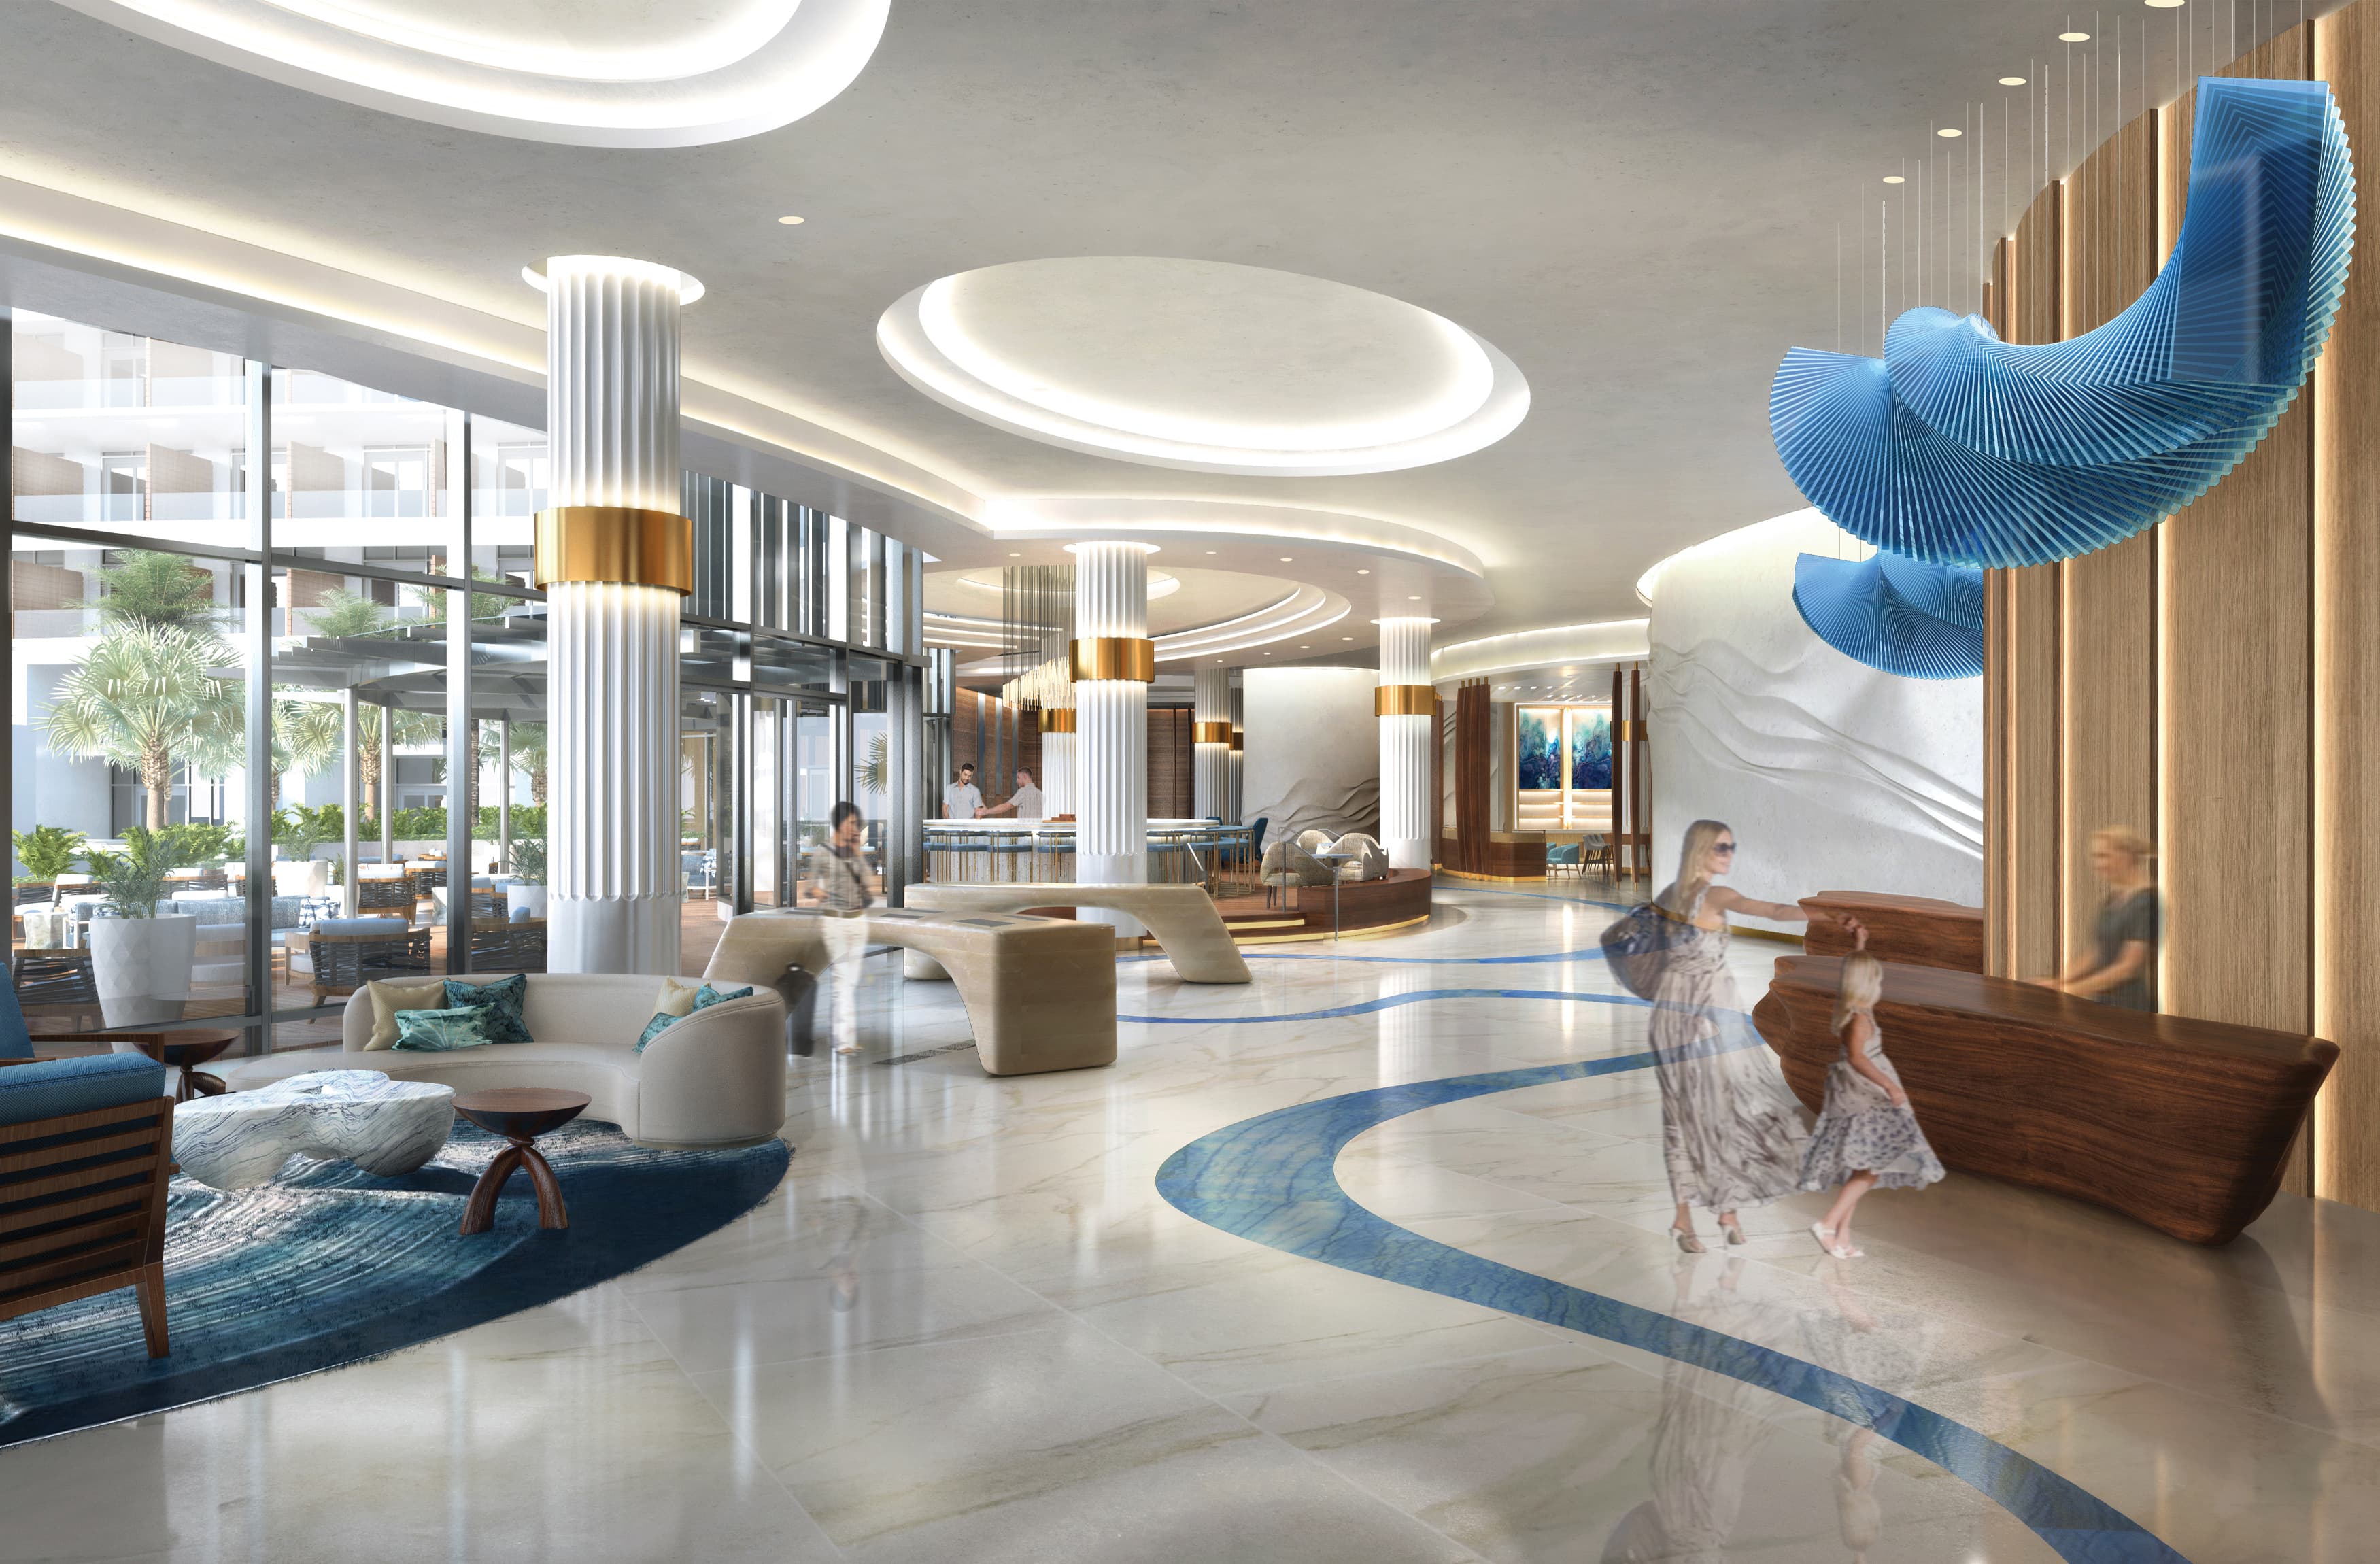 Pier Sixty-Six Hotel & Marina. Hospitality Design. Lobby Design. luxury resort destination, marina and residential mixed-use development.